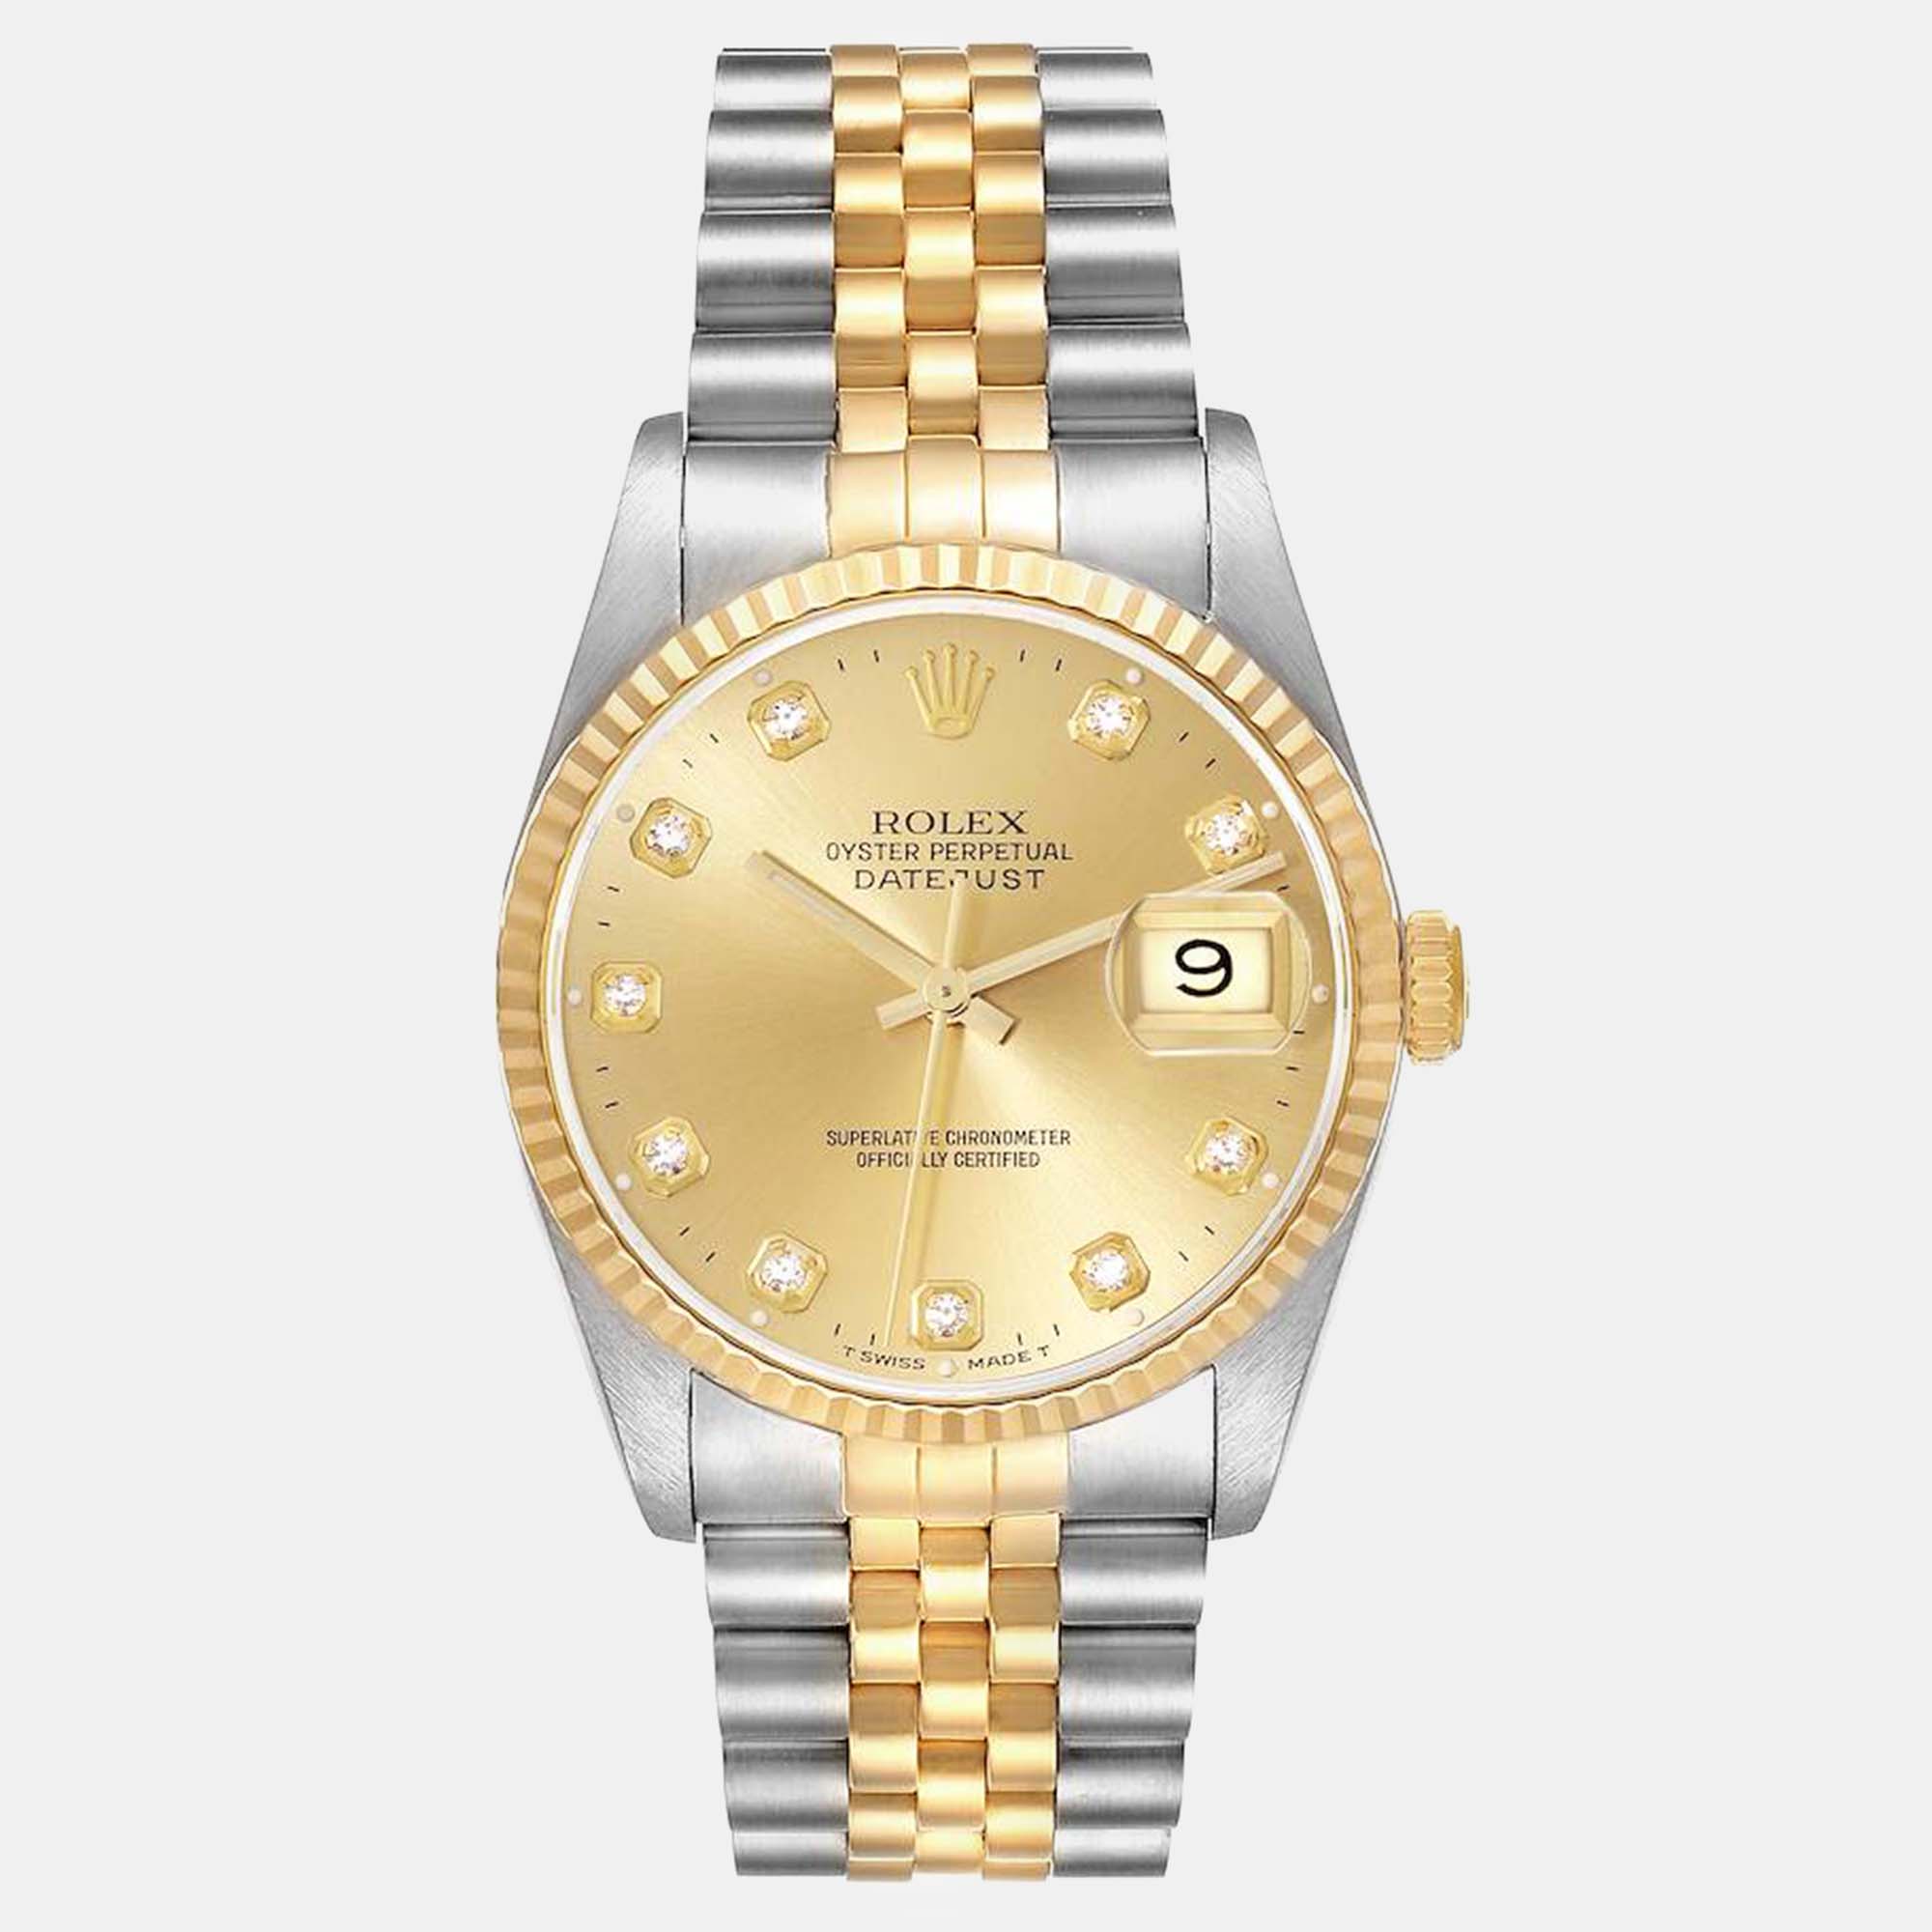 Rolex datejust champagne diamond dial steel yellow gold men's watch 36 mm